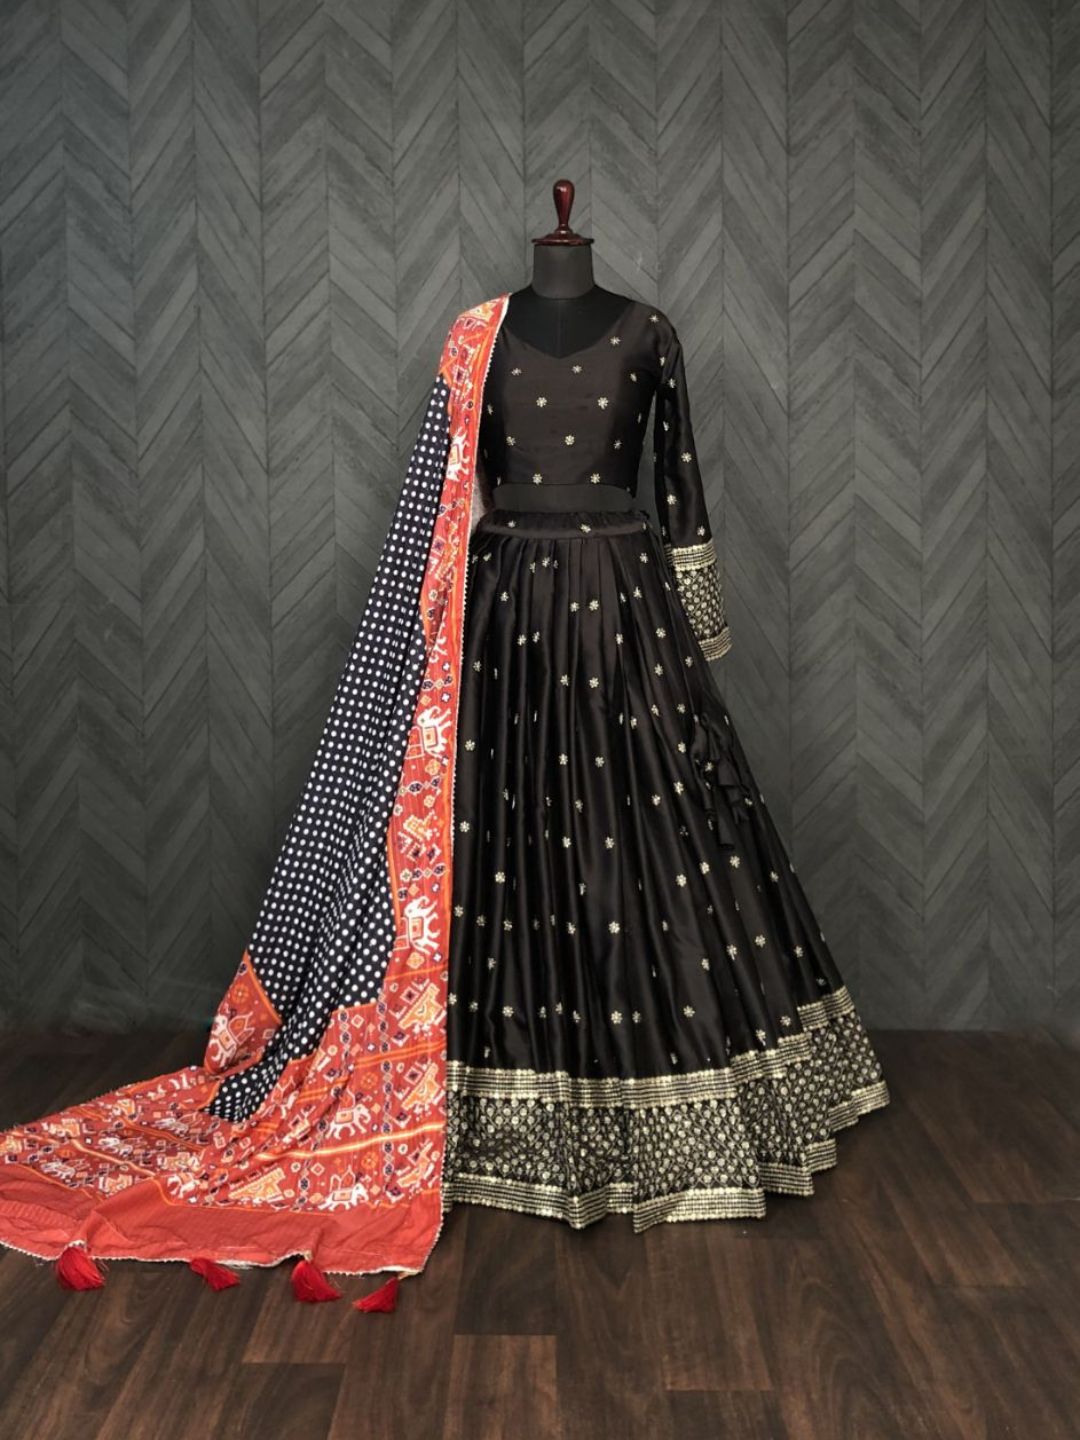 Attractive multiple fabric combination Lehenga & Choli at Rs 2200 | Salwar  Kameez in Surat | ID: 2852417101155